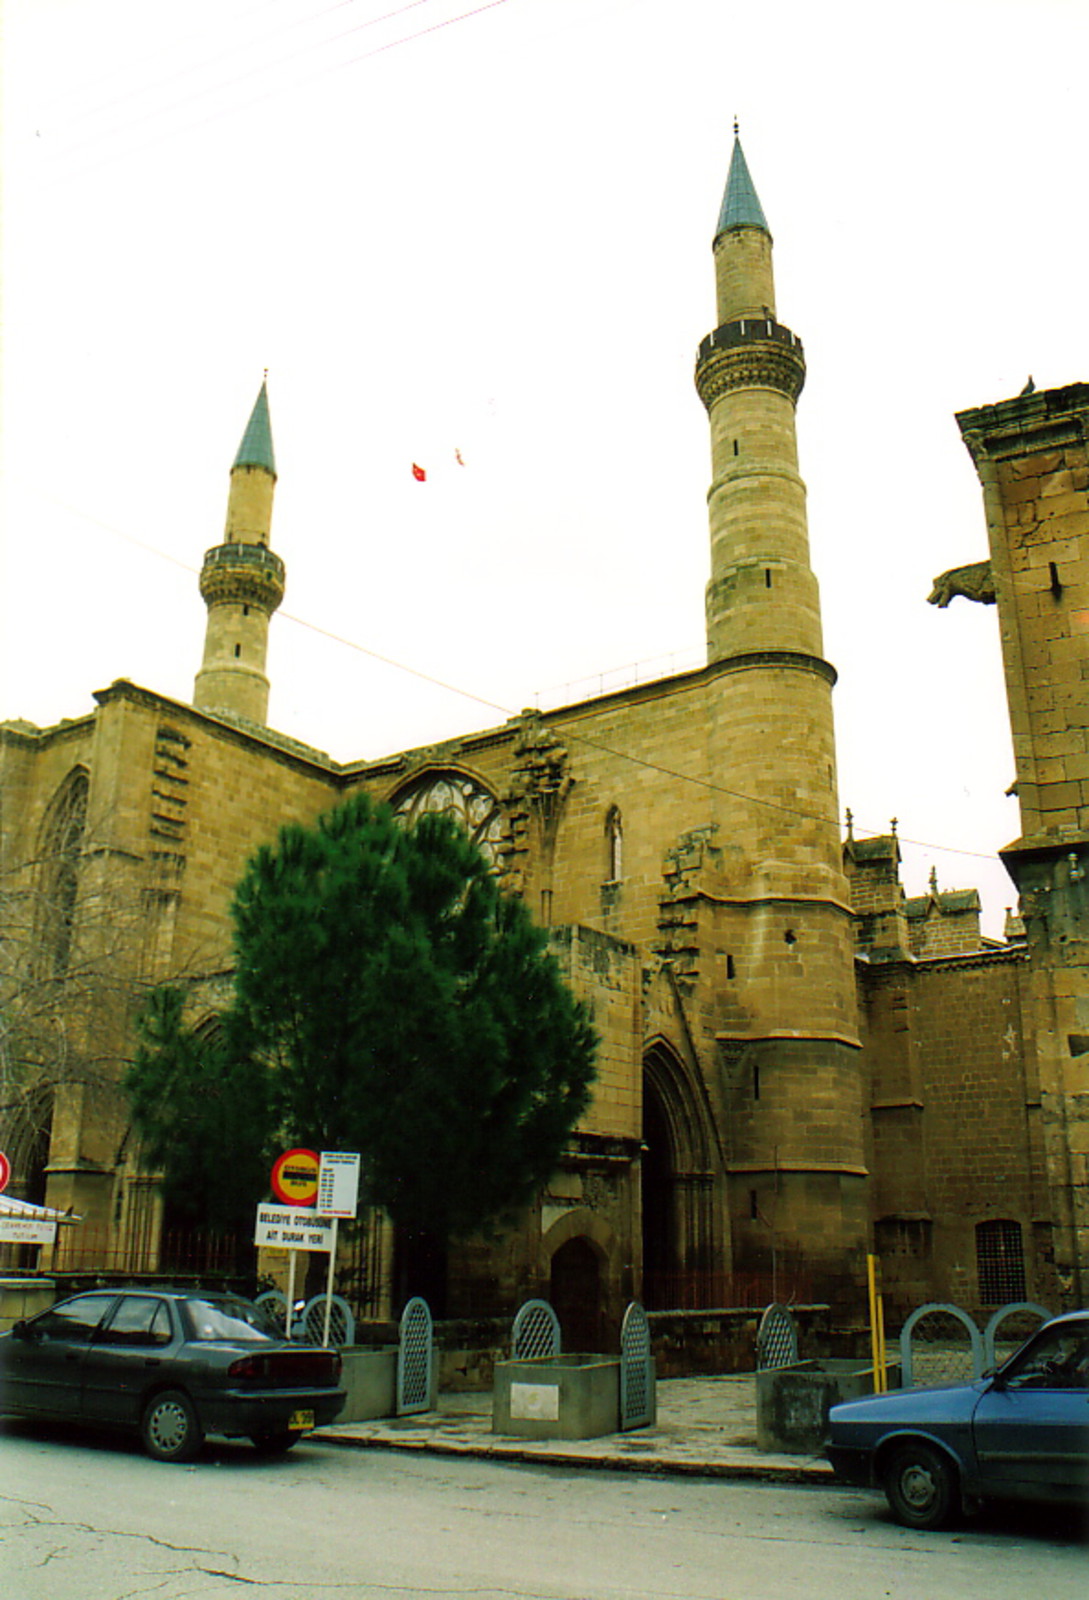 The minarets of the Djami Selimiye